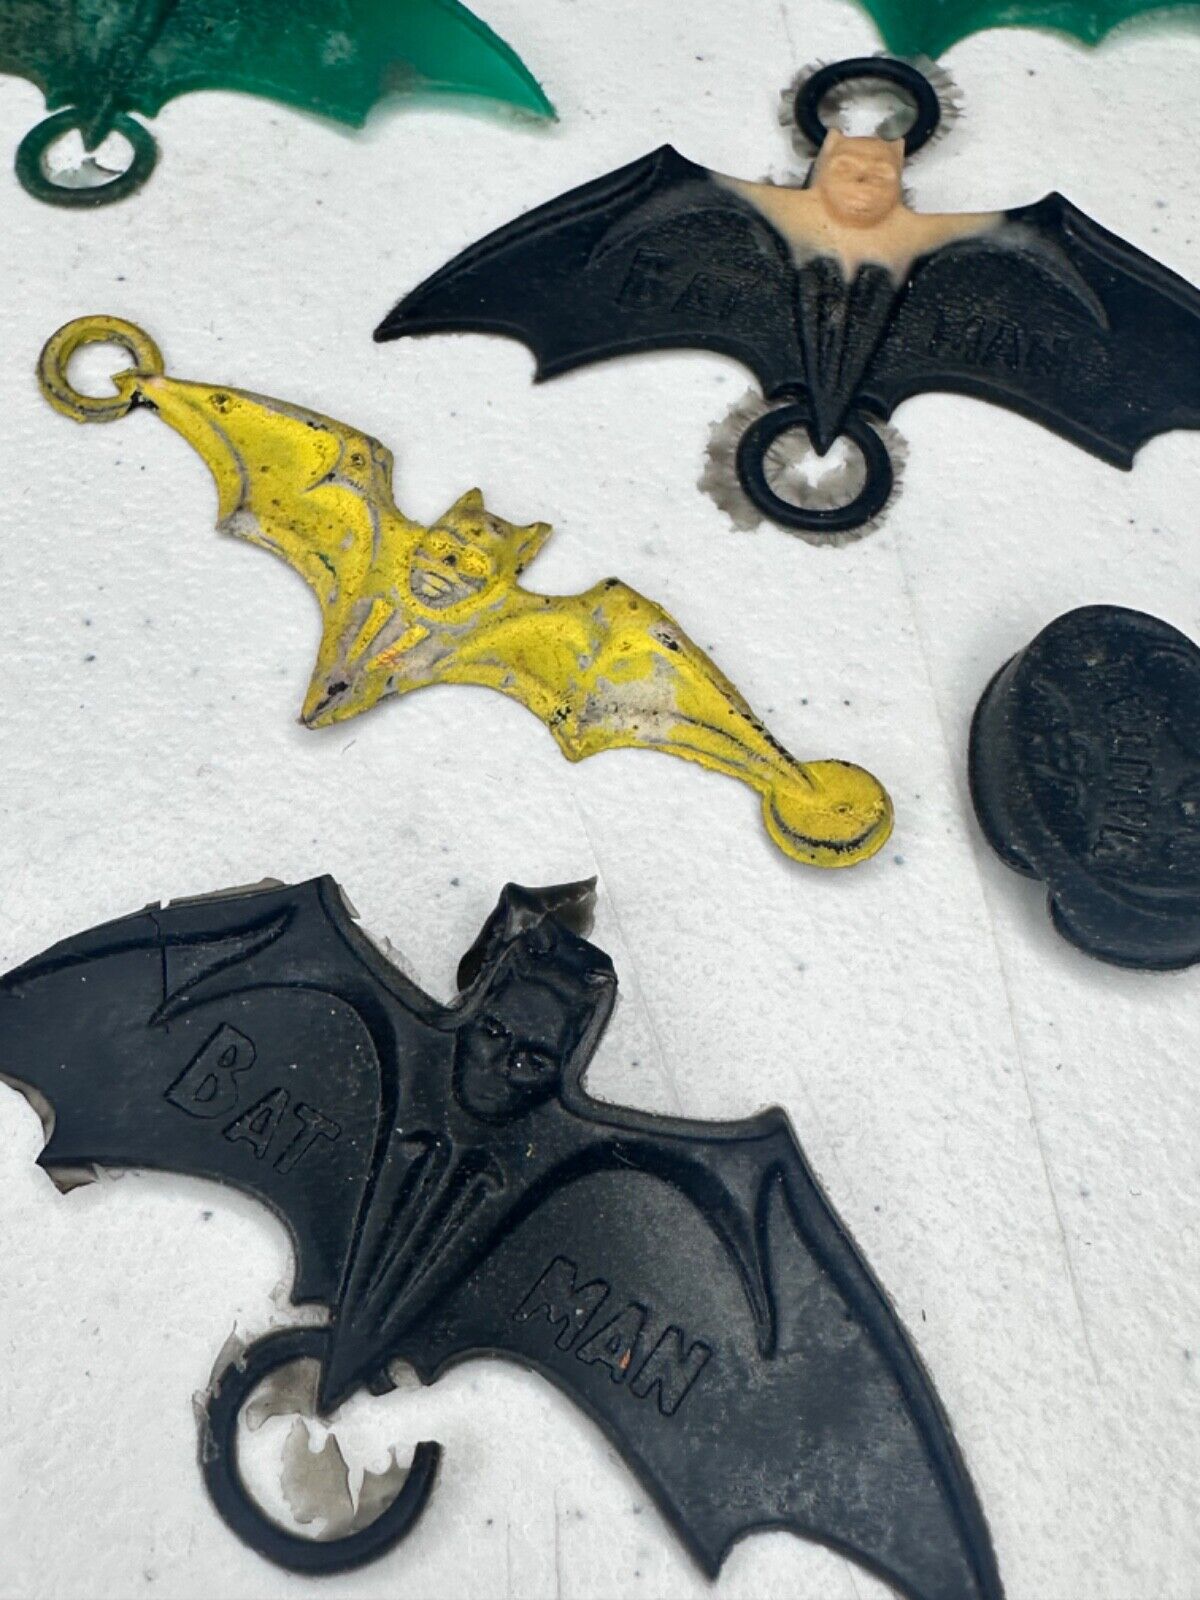 Rare 1965 Mattel Batman Creepy Crawlers Mold - Vintage Collectible Figures & Original Mold - TreasuTiques